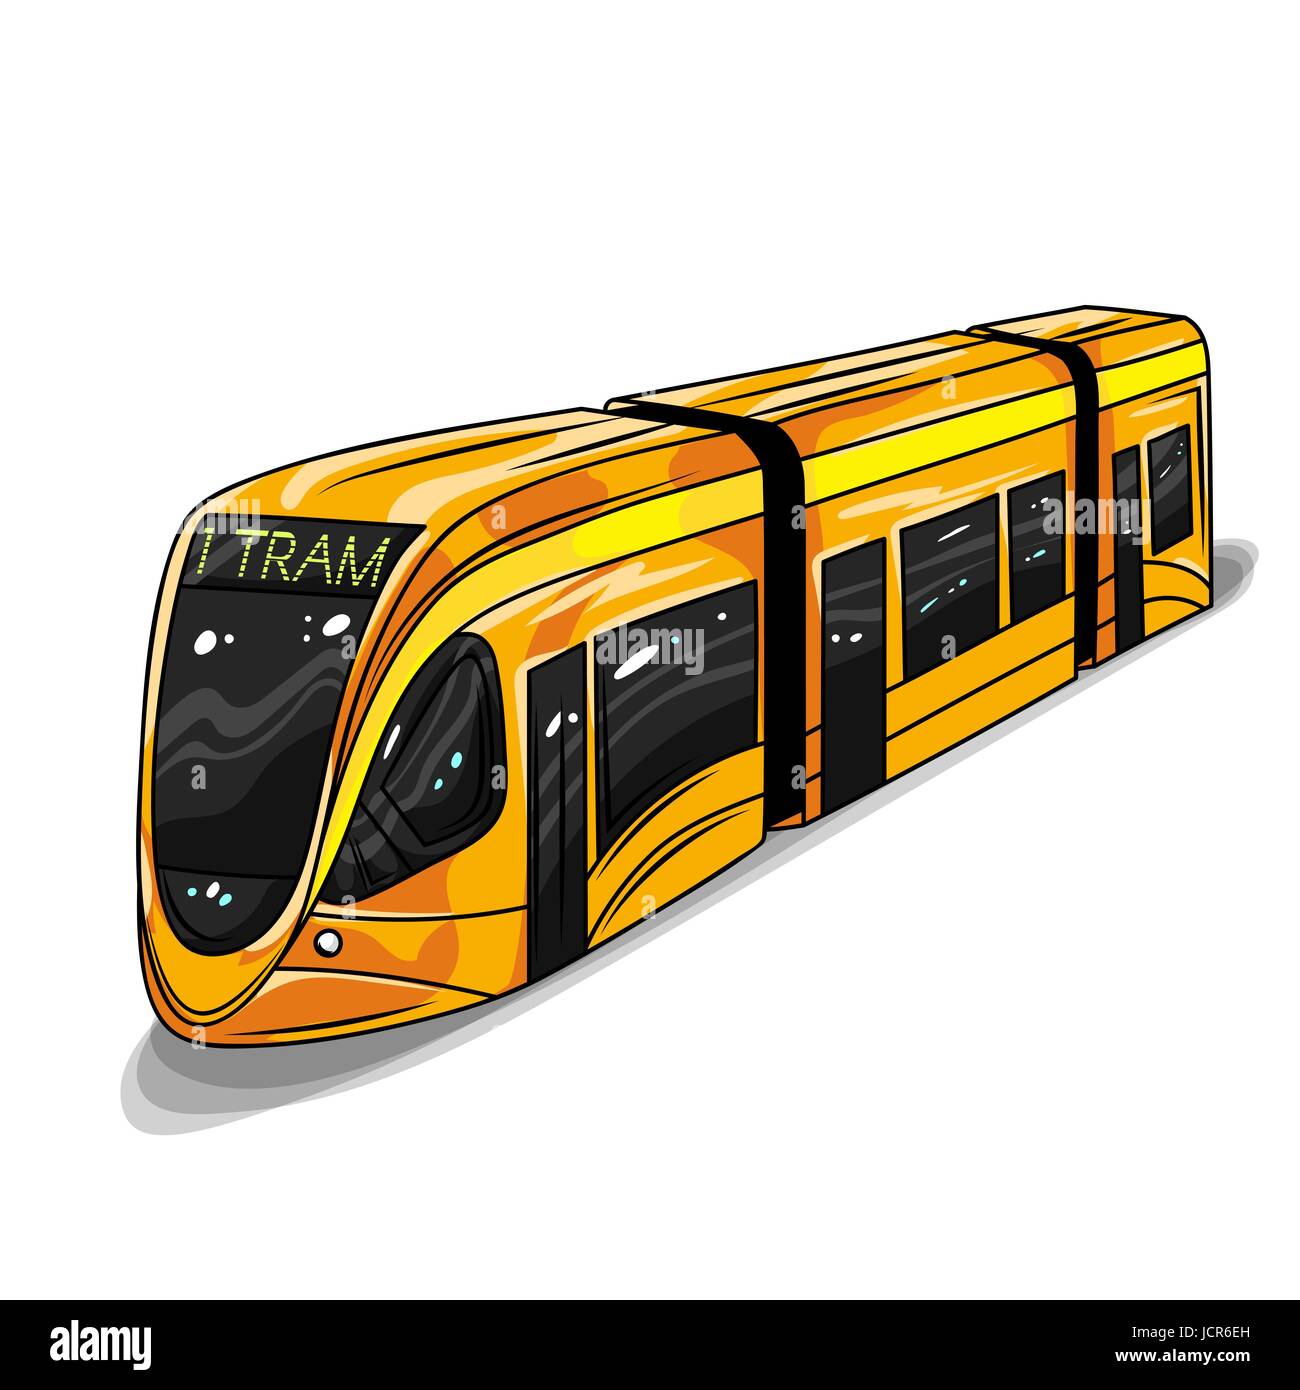 Vector hand drawn illustration of modern tram car. Illustration for print, web. Stock Vector